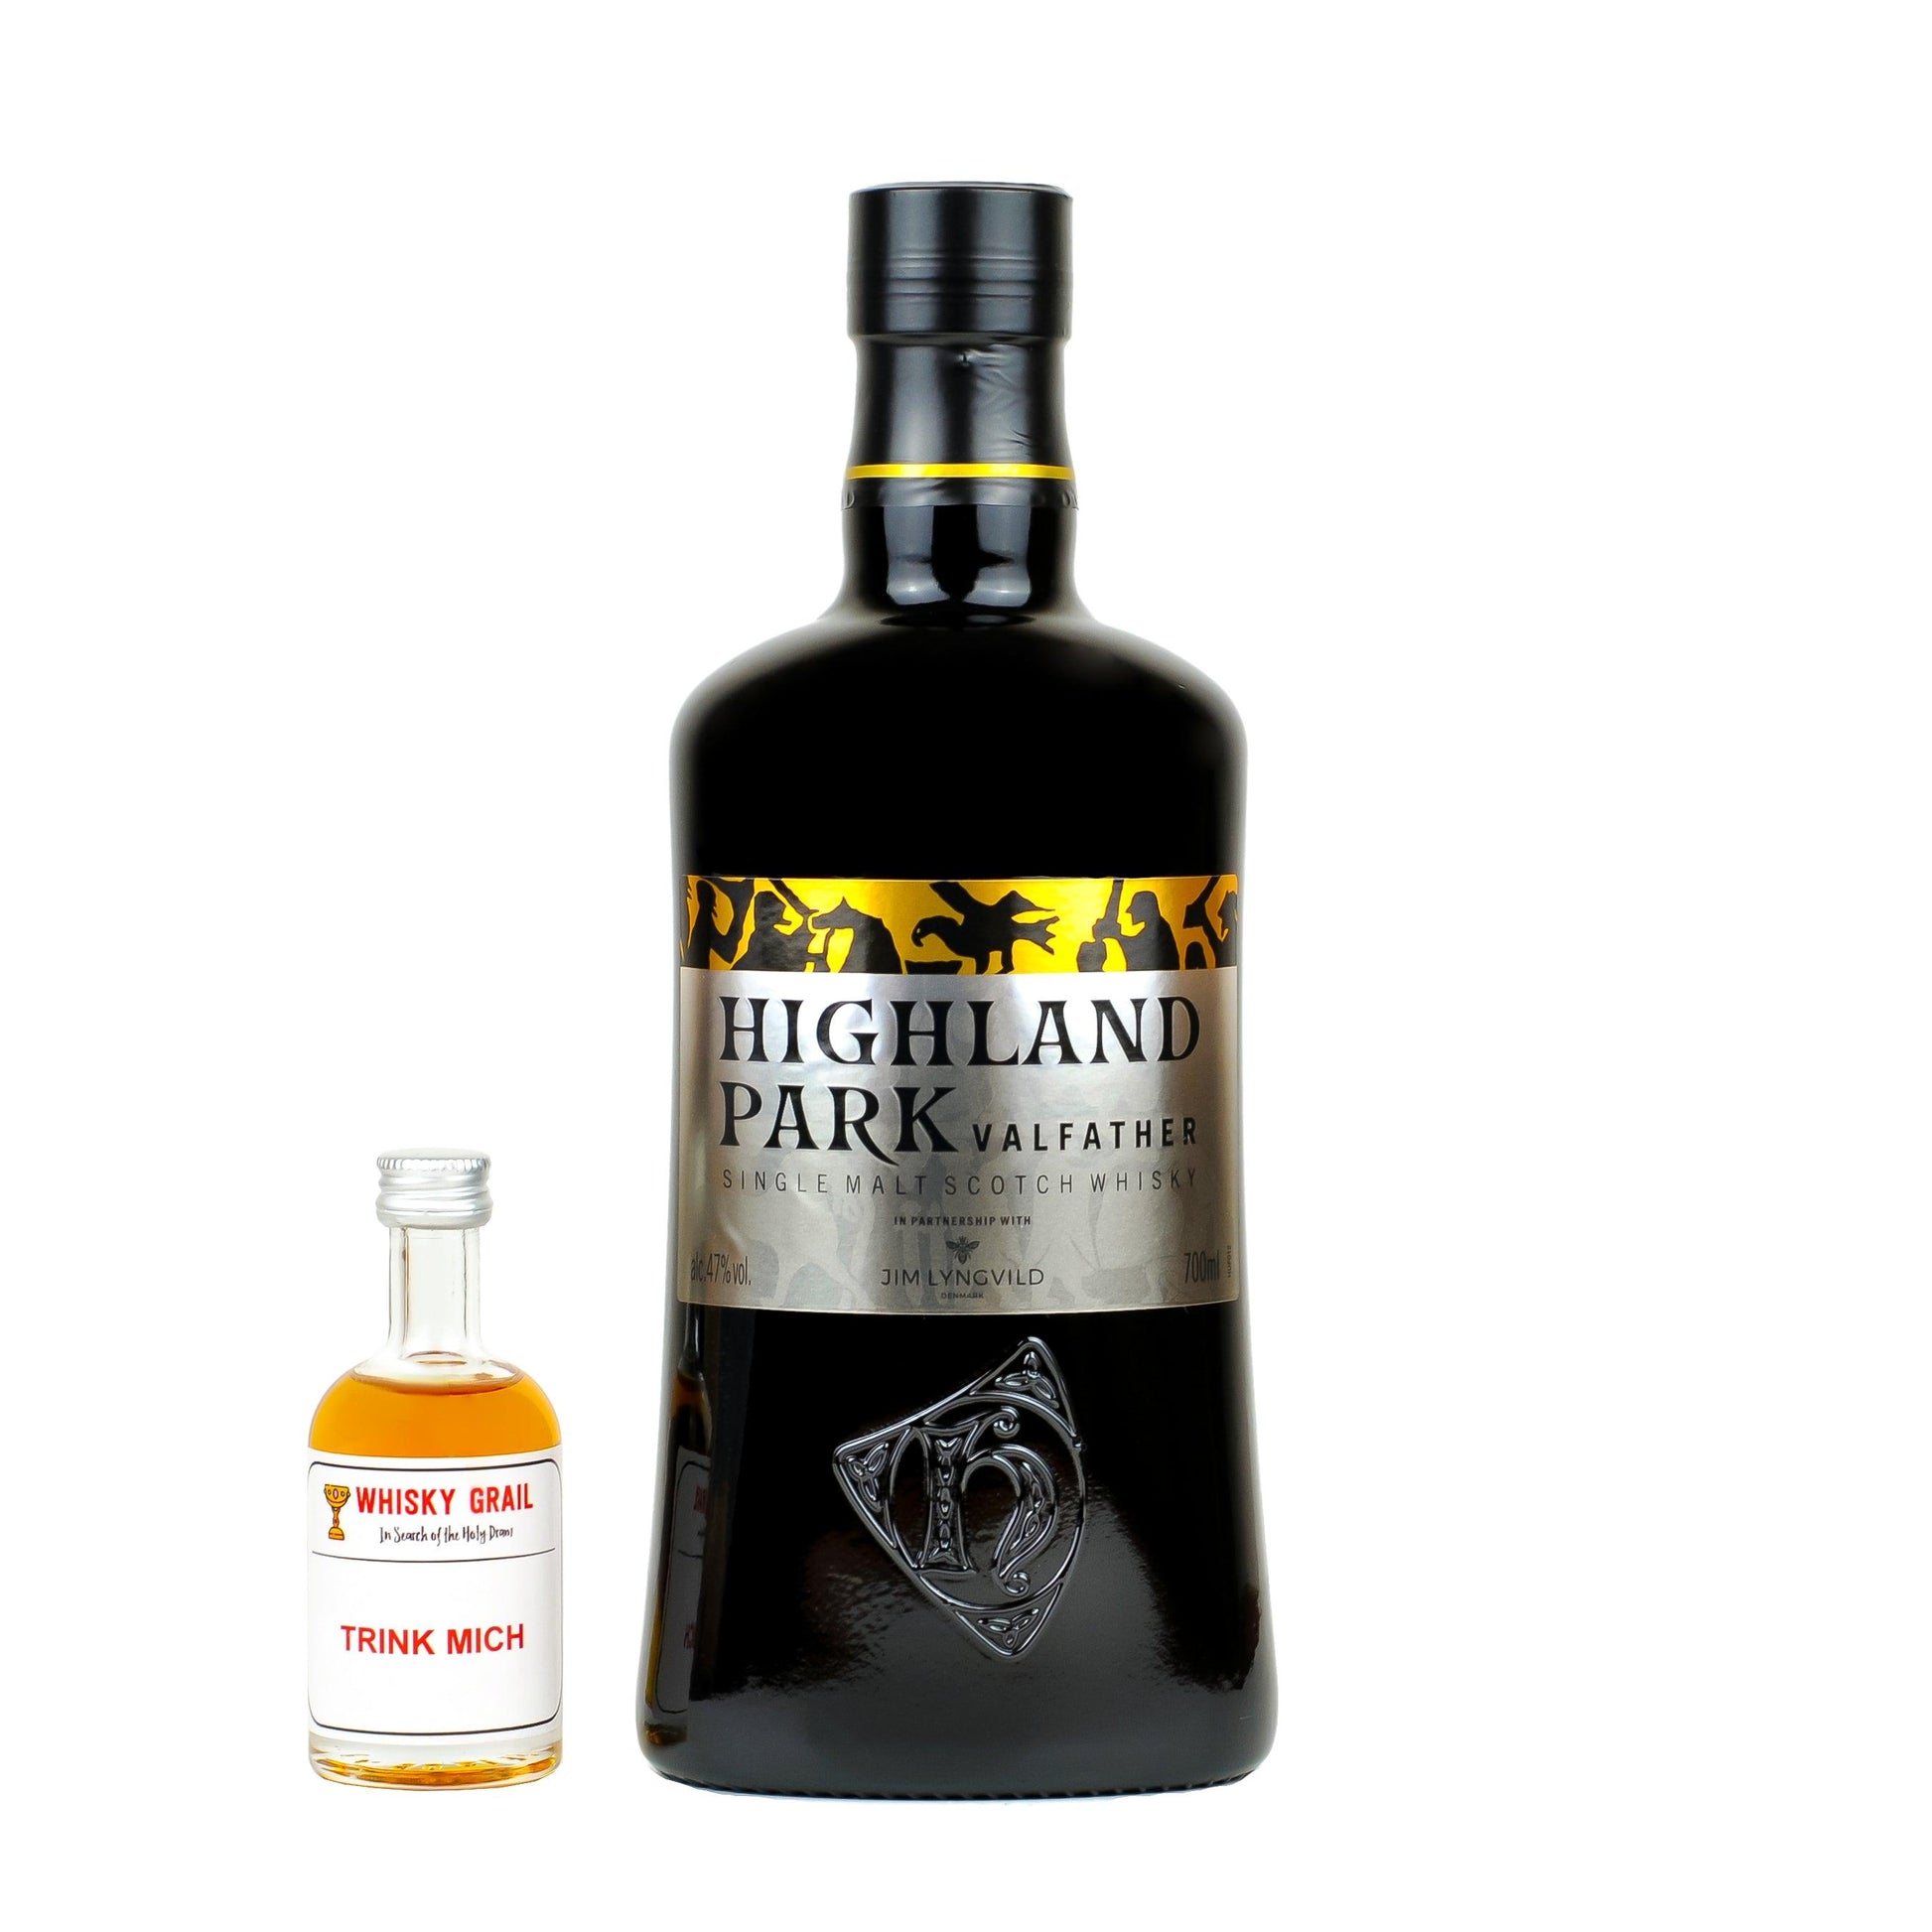 Highland Park Valfather <br>5 cl - Whisky Grail